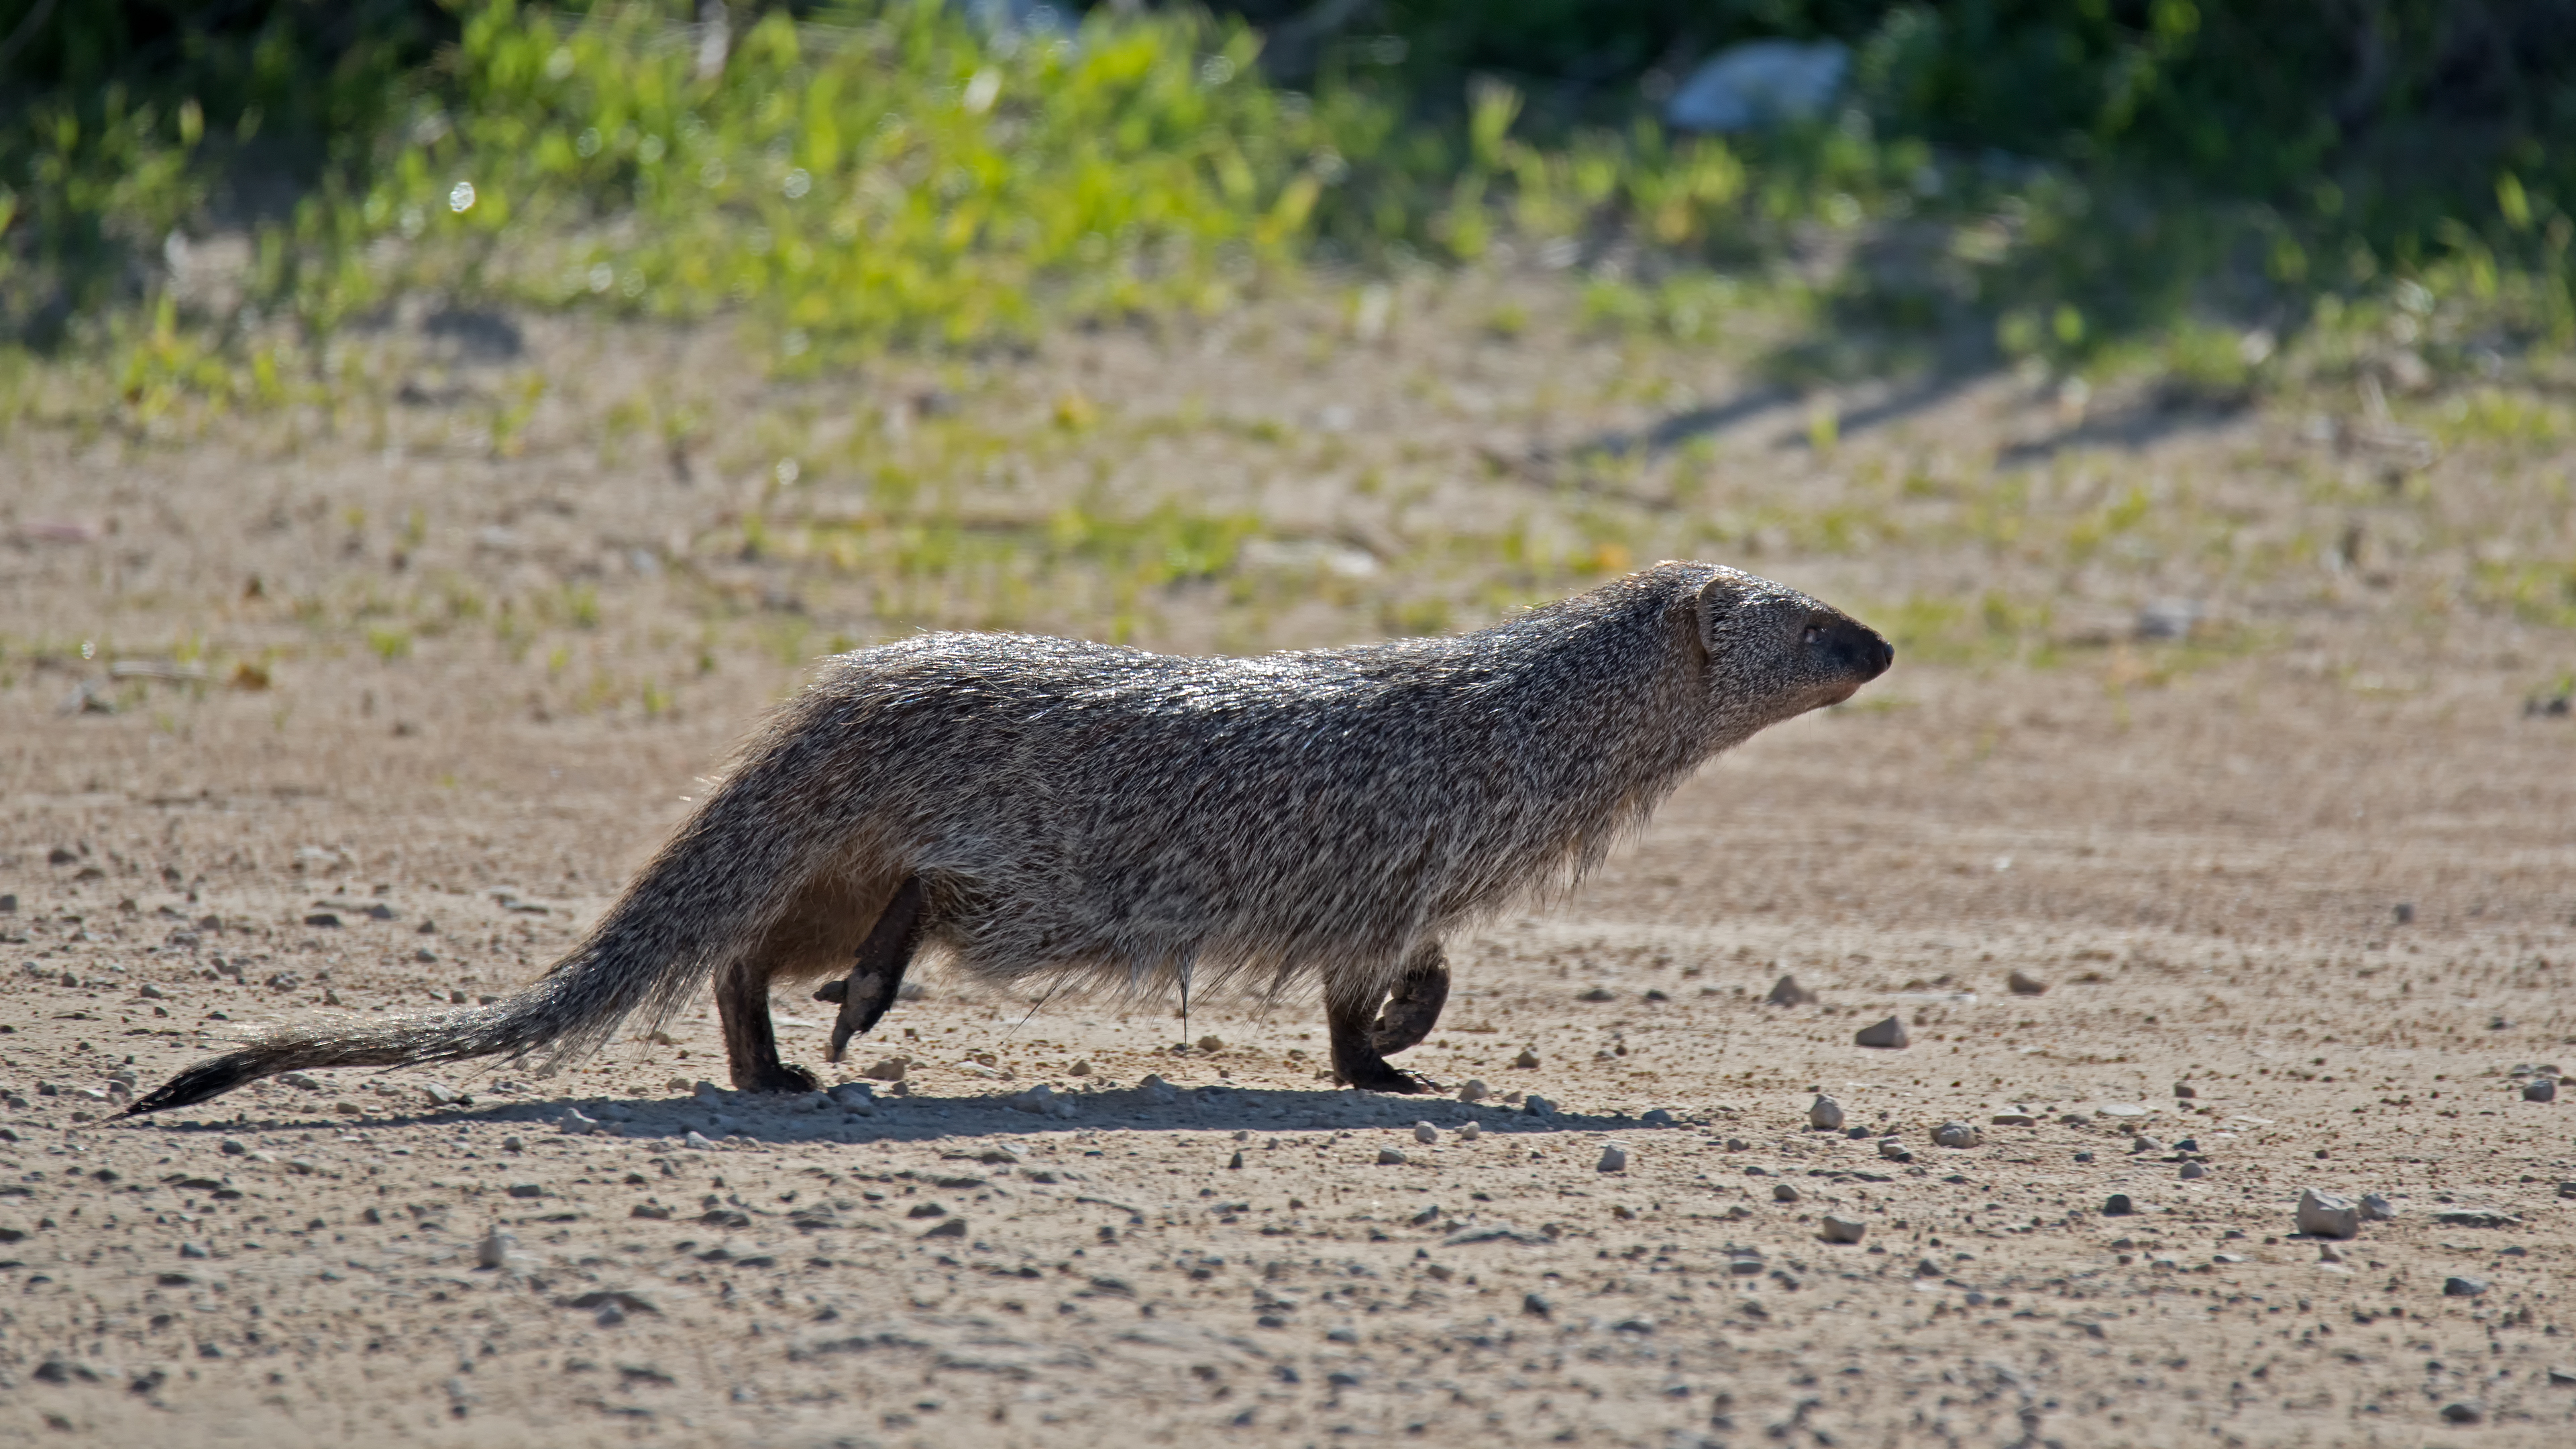 Mongoose - Herpestes ichneumon